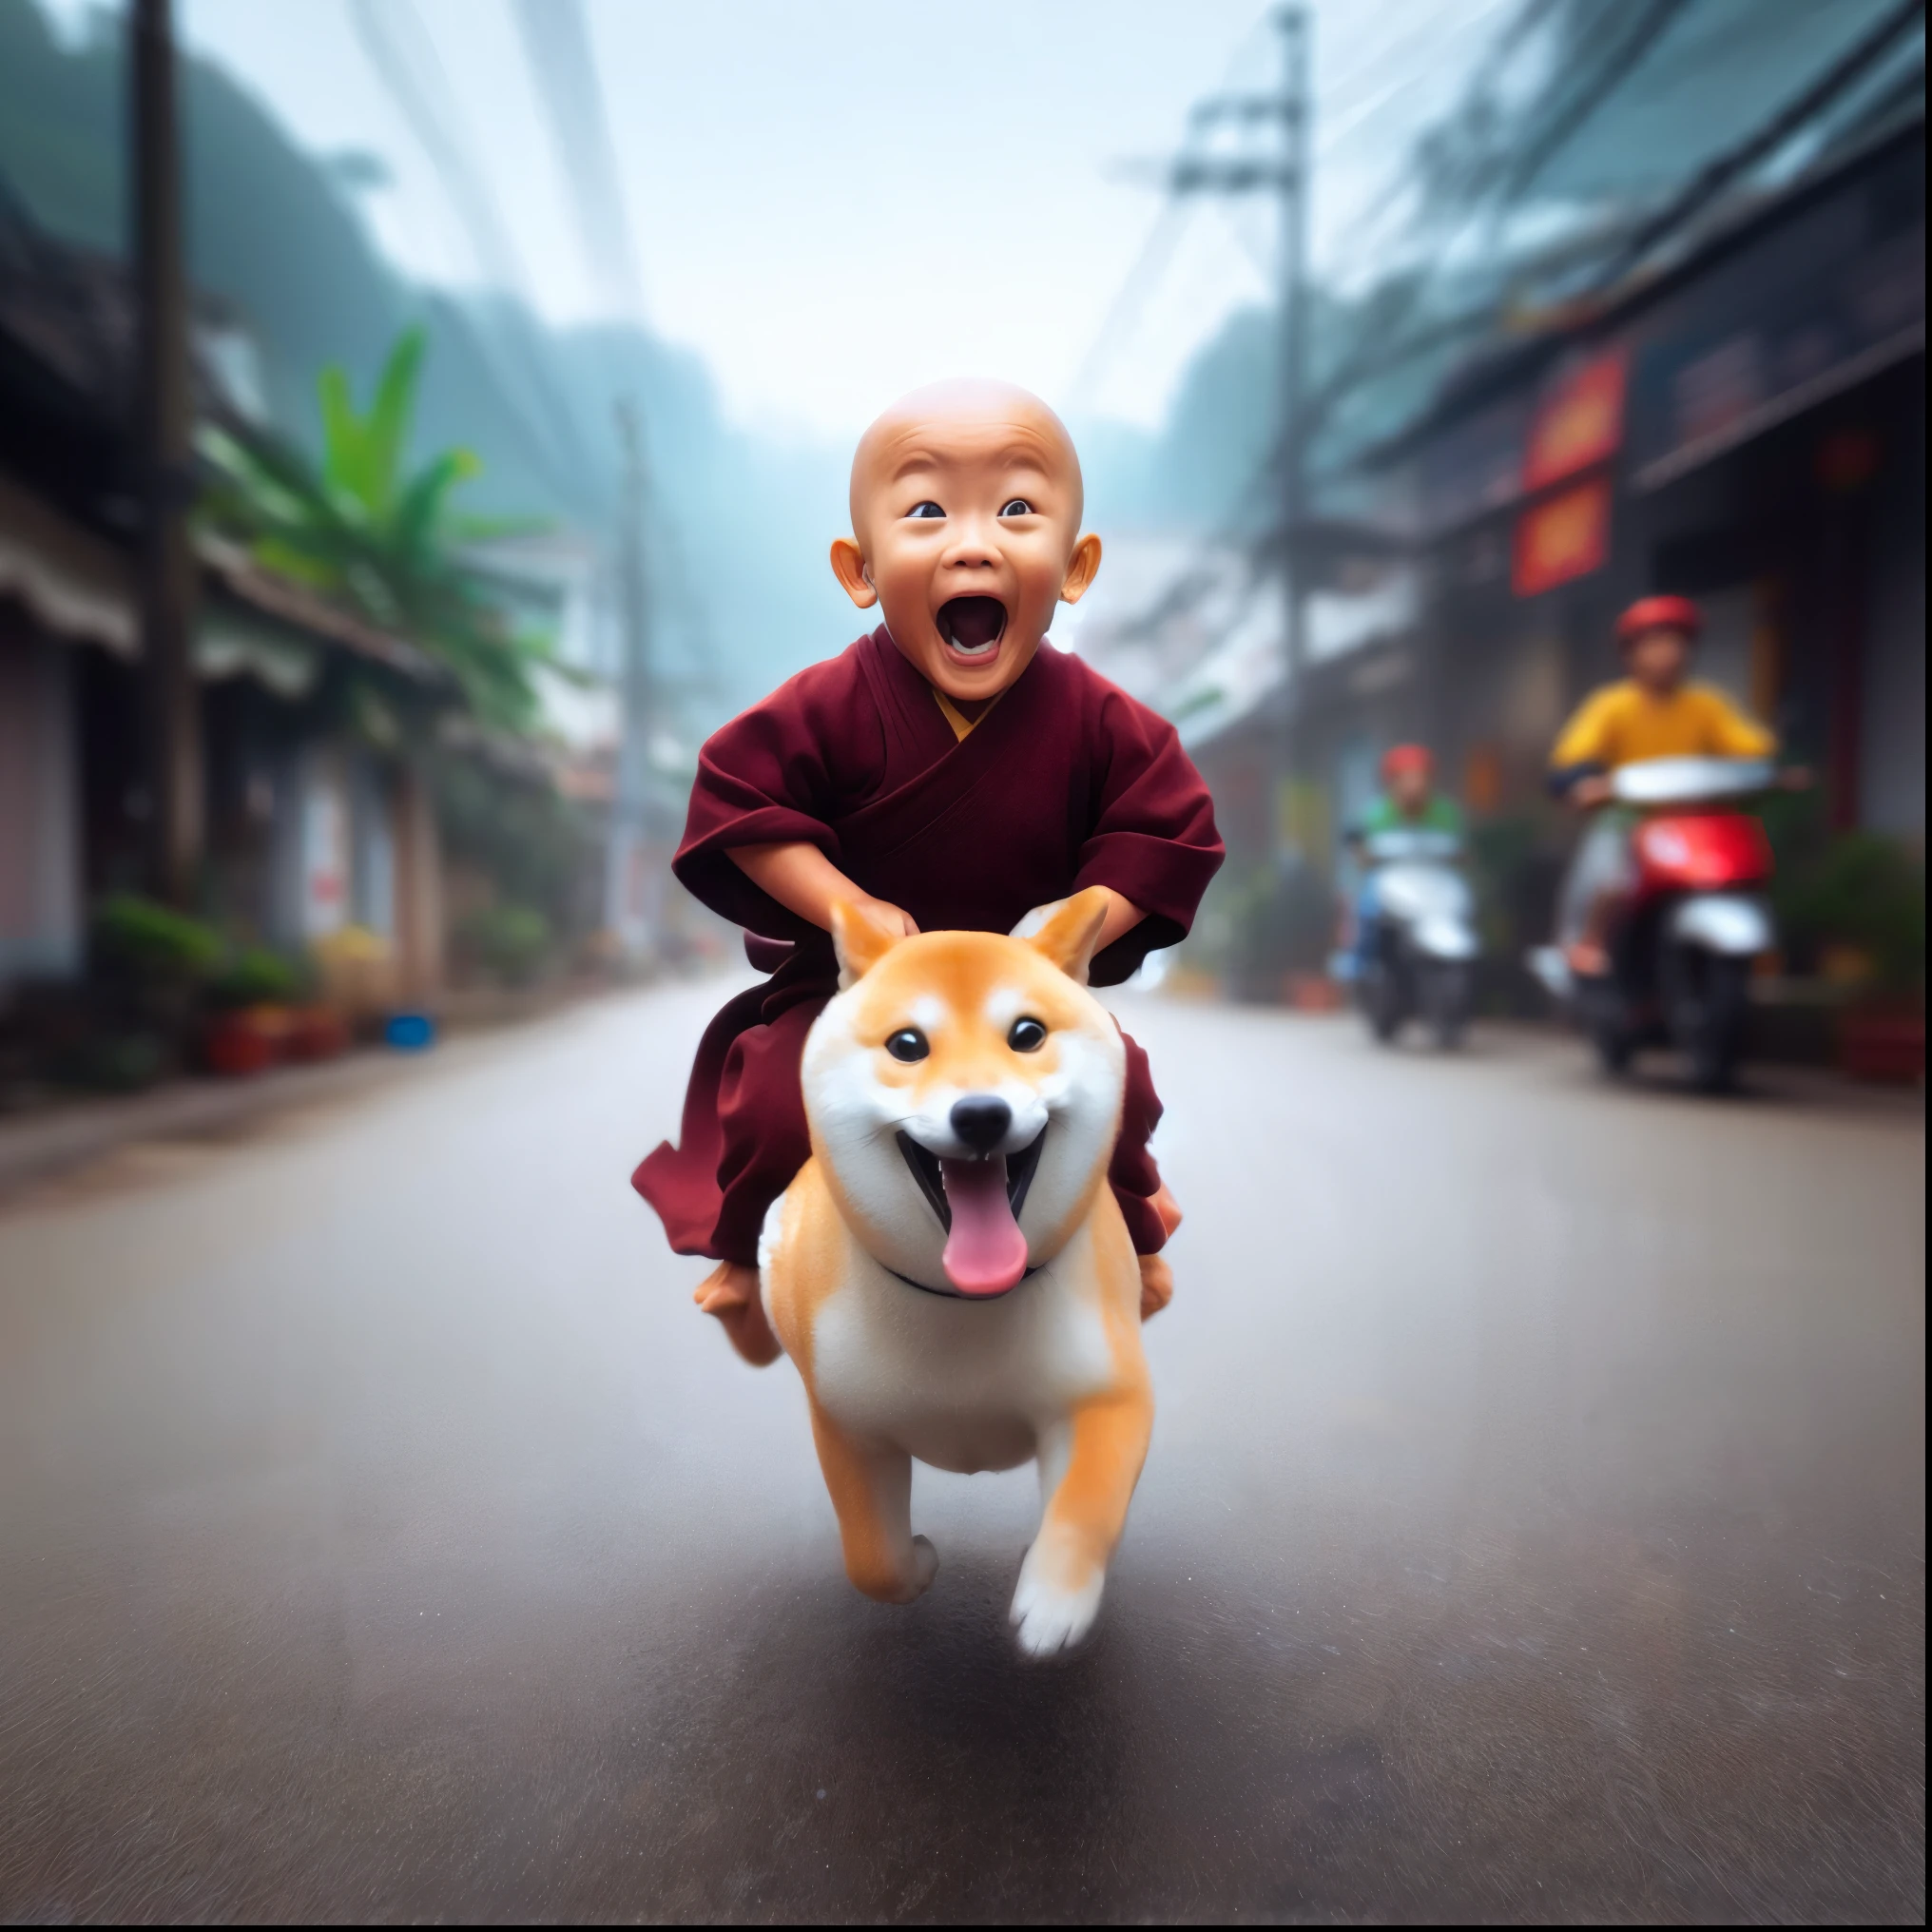 arafed image of a 수도사 riding a dog on a street, 불교, 신으로서의 개, 2 1 st century 수도사, 놀라운 깊이, 총독, 불교, 엄청난, 그의 과잉 활동적인 작은 개와 함께, Guweiz 스타일의 예술 작품, 사랑스러운 디지털 페인팅, 수도사, 그는 매우 행복하다, 순수한 기쁨, Shiba Kōkan에게서 영감을 받은 곡